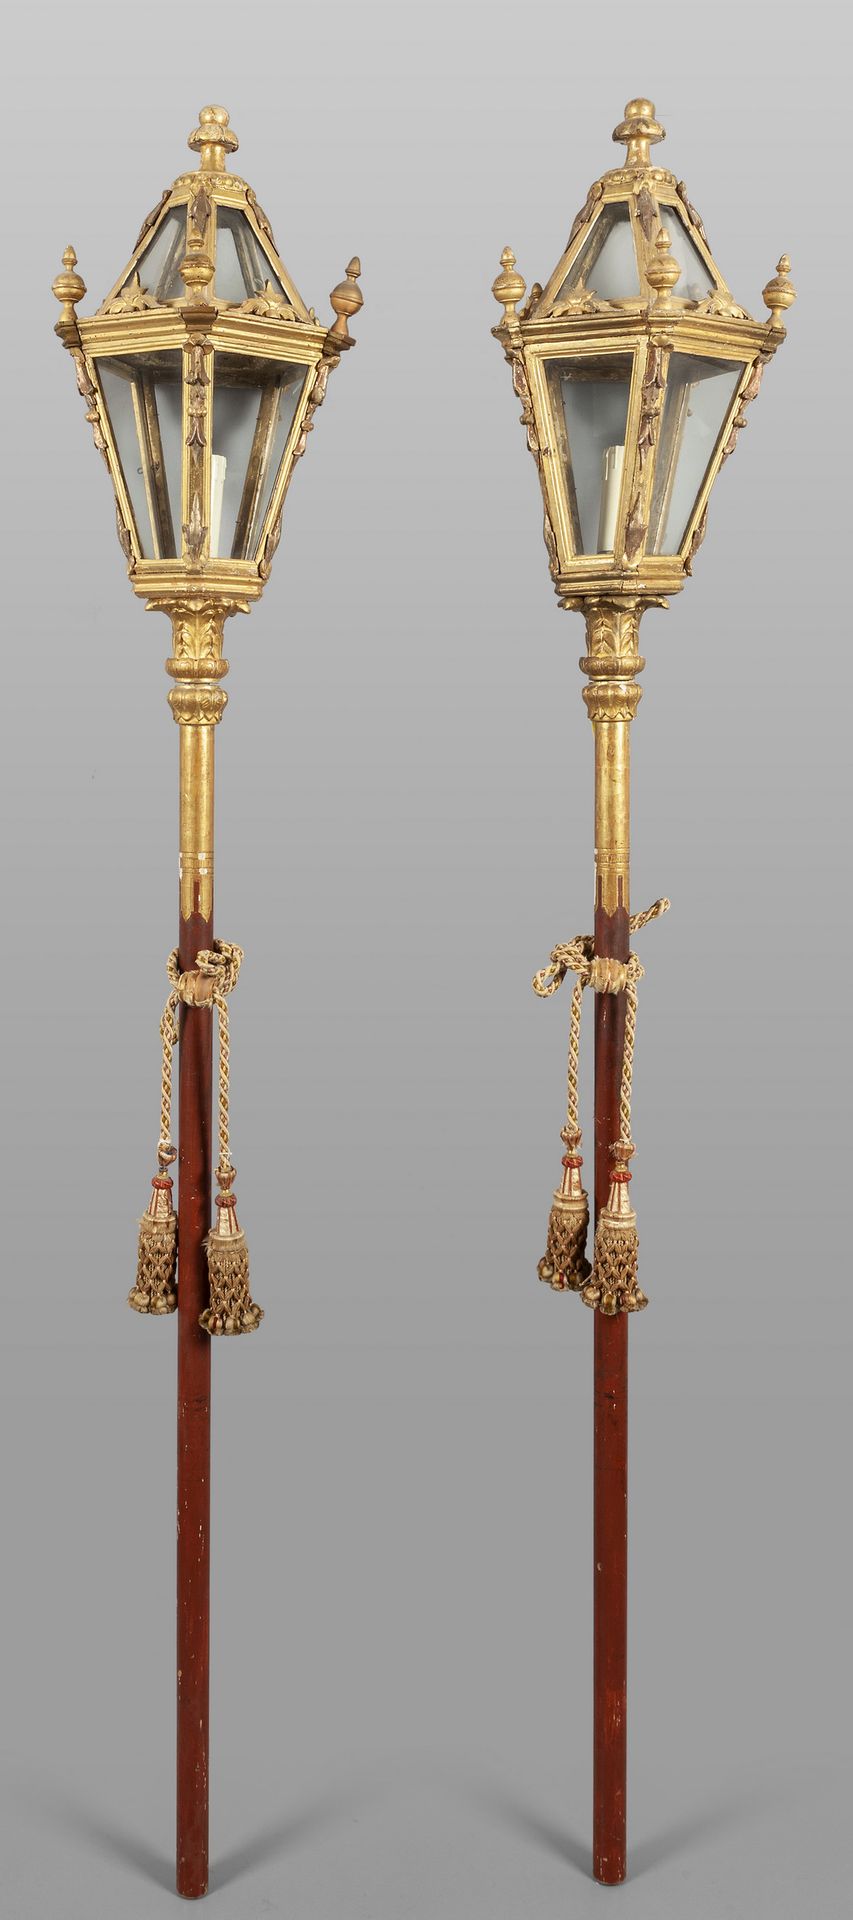 Coppia di lampioni da processione in legno 一对雕刻和镀金的木制游行灯柱，放置在同时期的棍子上，热那亚18世纪
h.T&hellip;